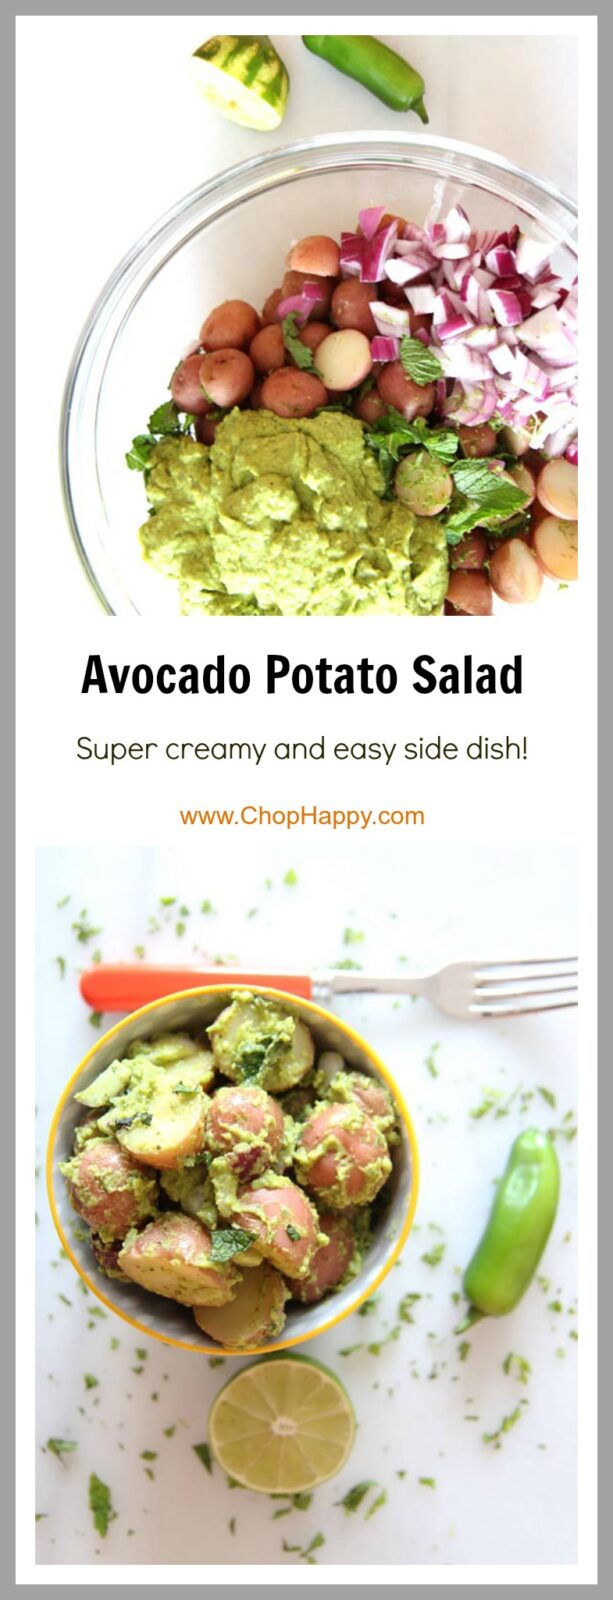 Avocado Potato Salad Recipe. Every bite is creamy, citrusy, and feels like a perfect union of guacamole and potato salad. Easy and fun to make. ChopHappy.com